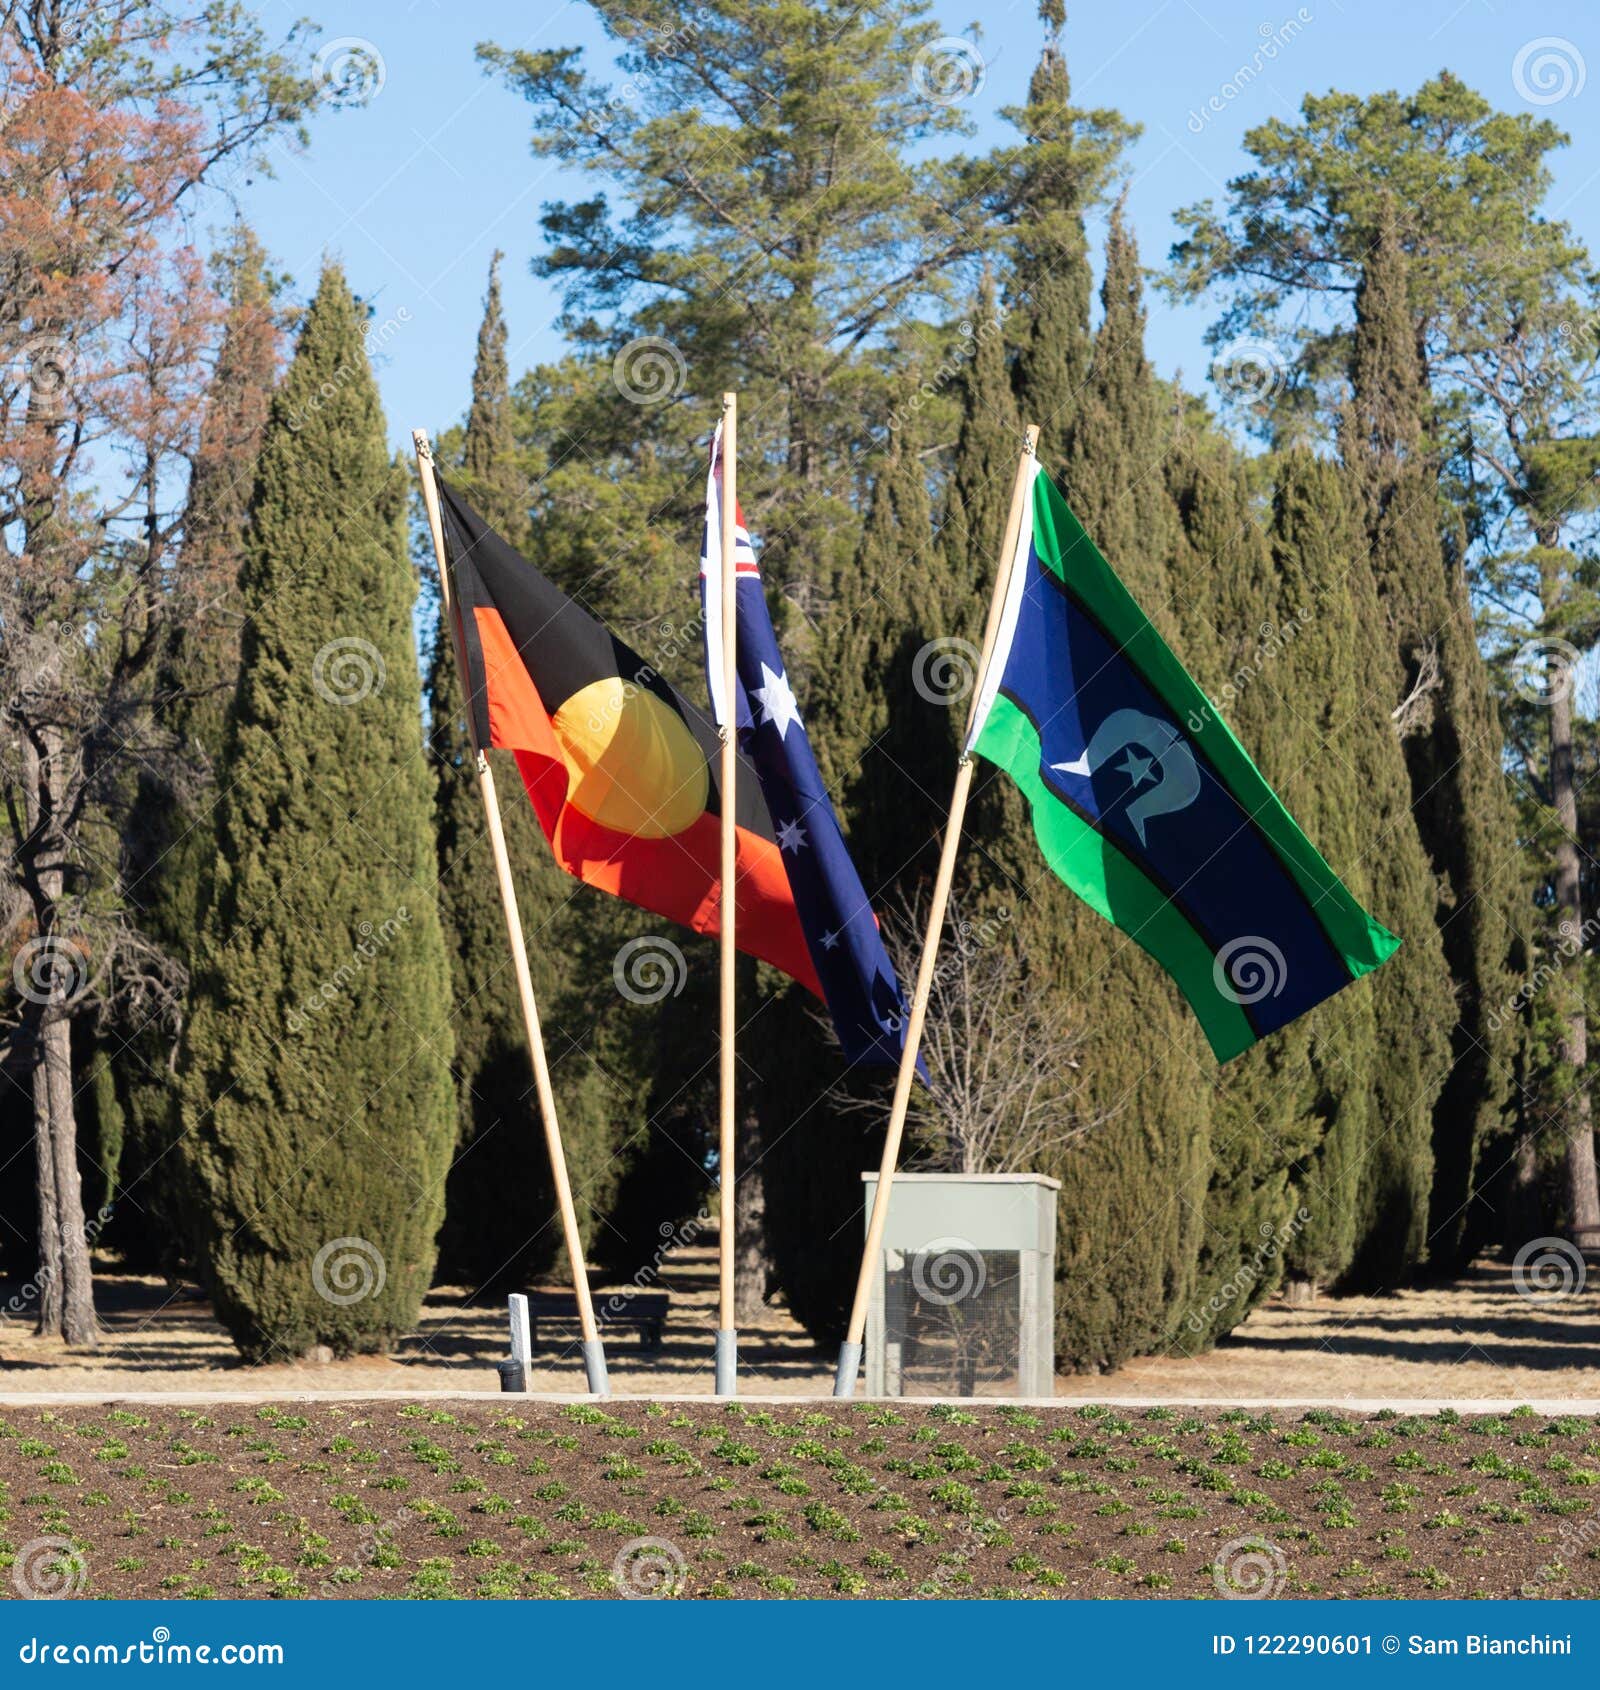 australian aboriginal, national, and torres strait islands flags